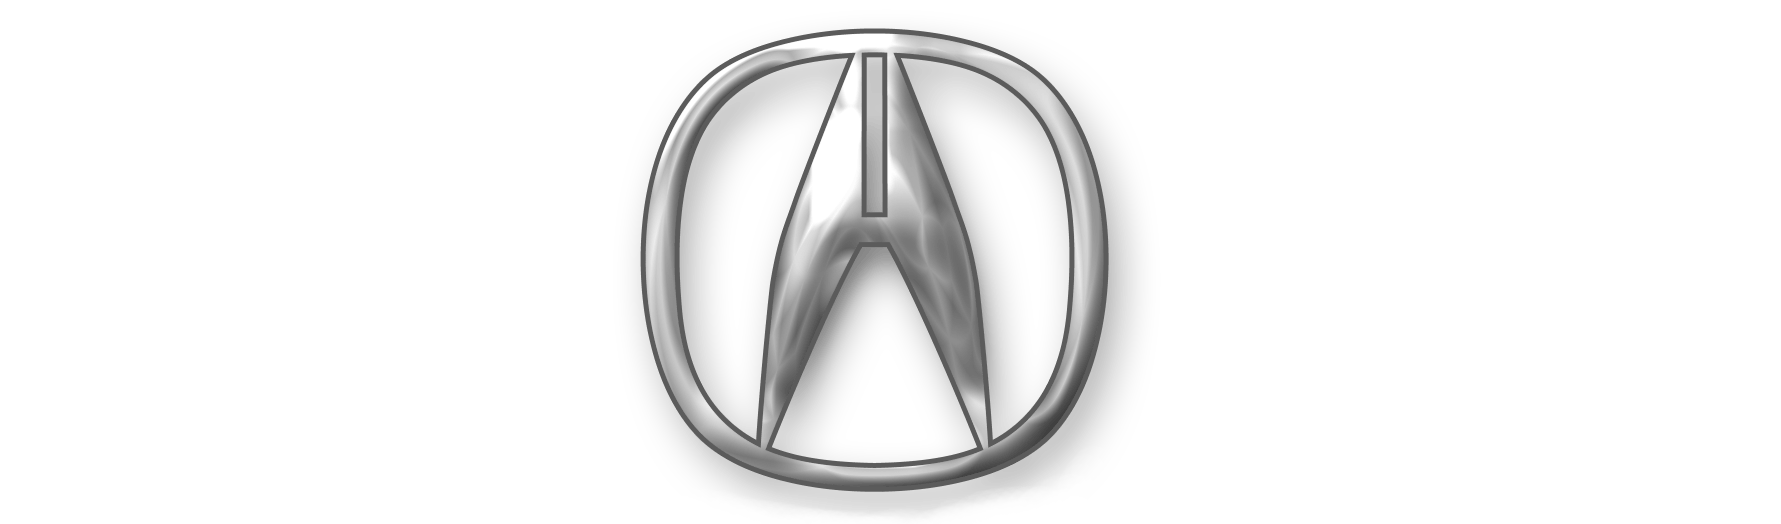 Acura Logo - Acura Logo Meaning and History. Acura symbol. World Cars Brands